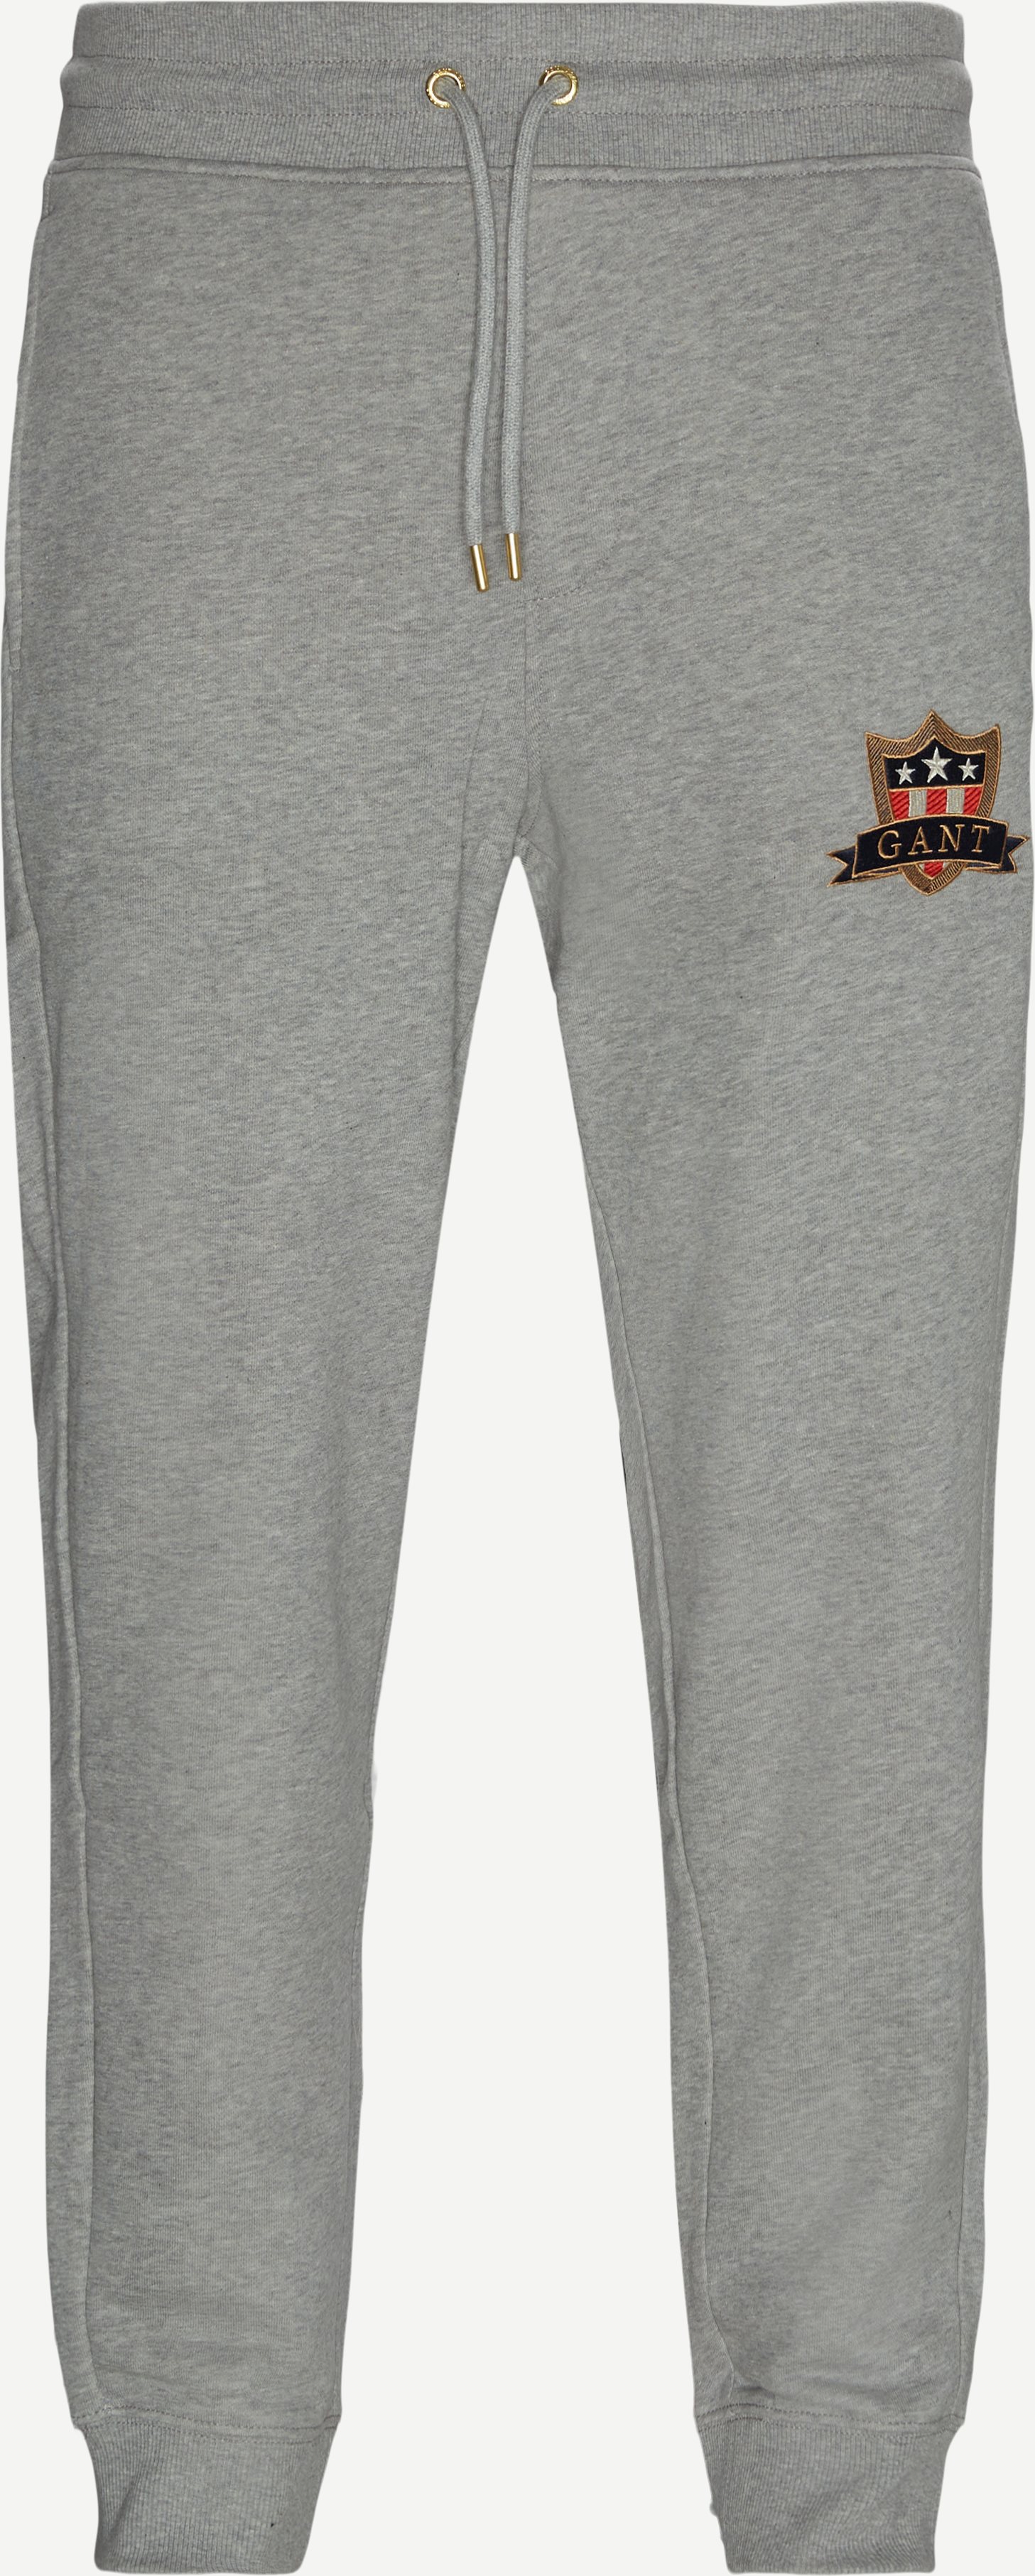 Banner Shield Pants - Trousers - Regular fit - Grey